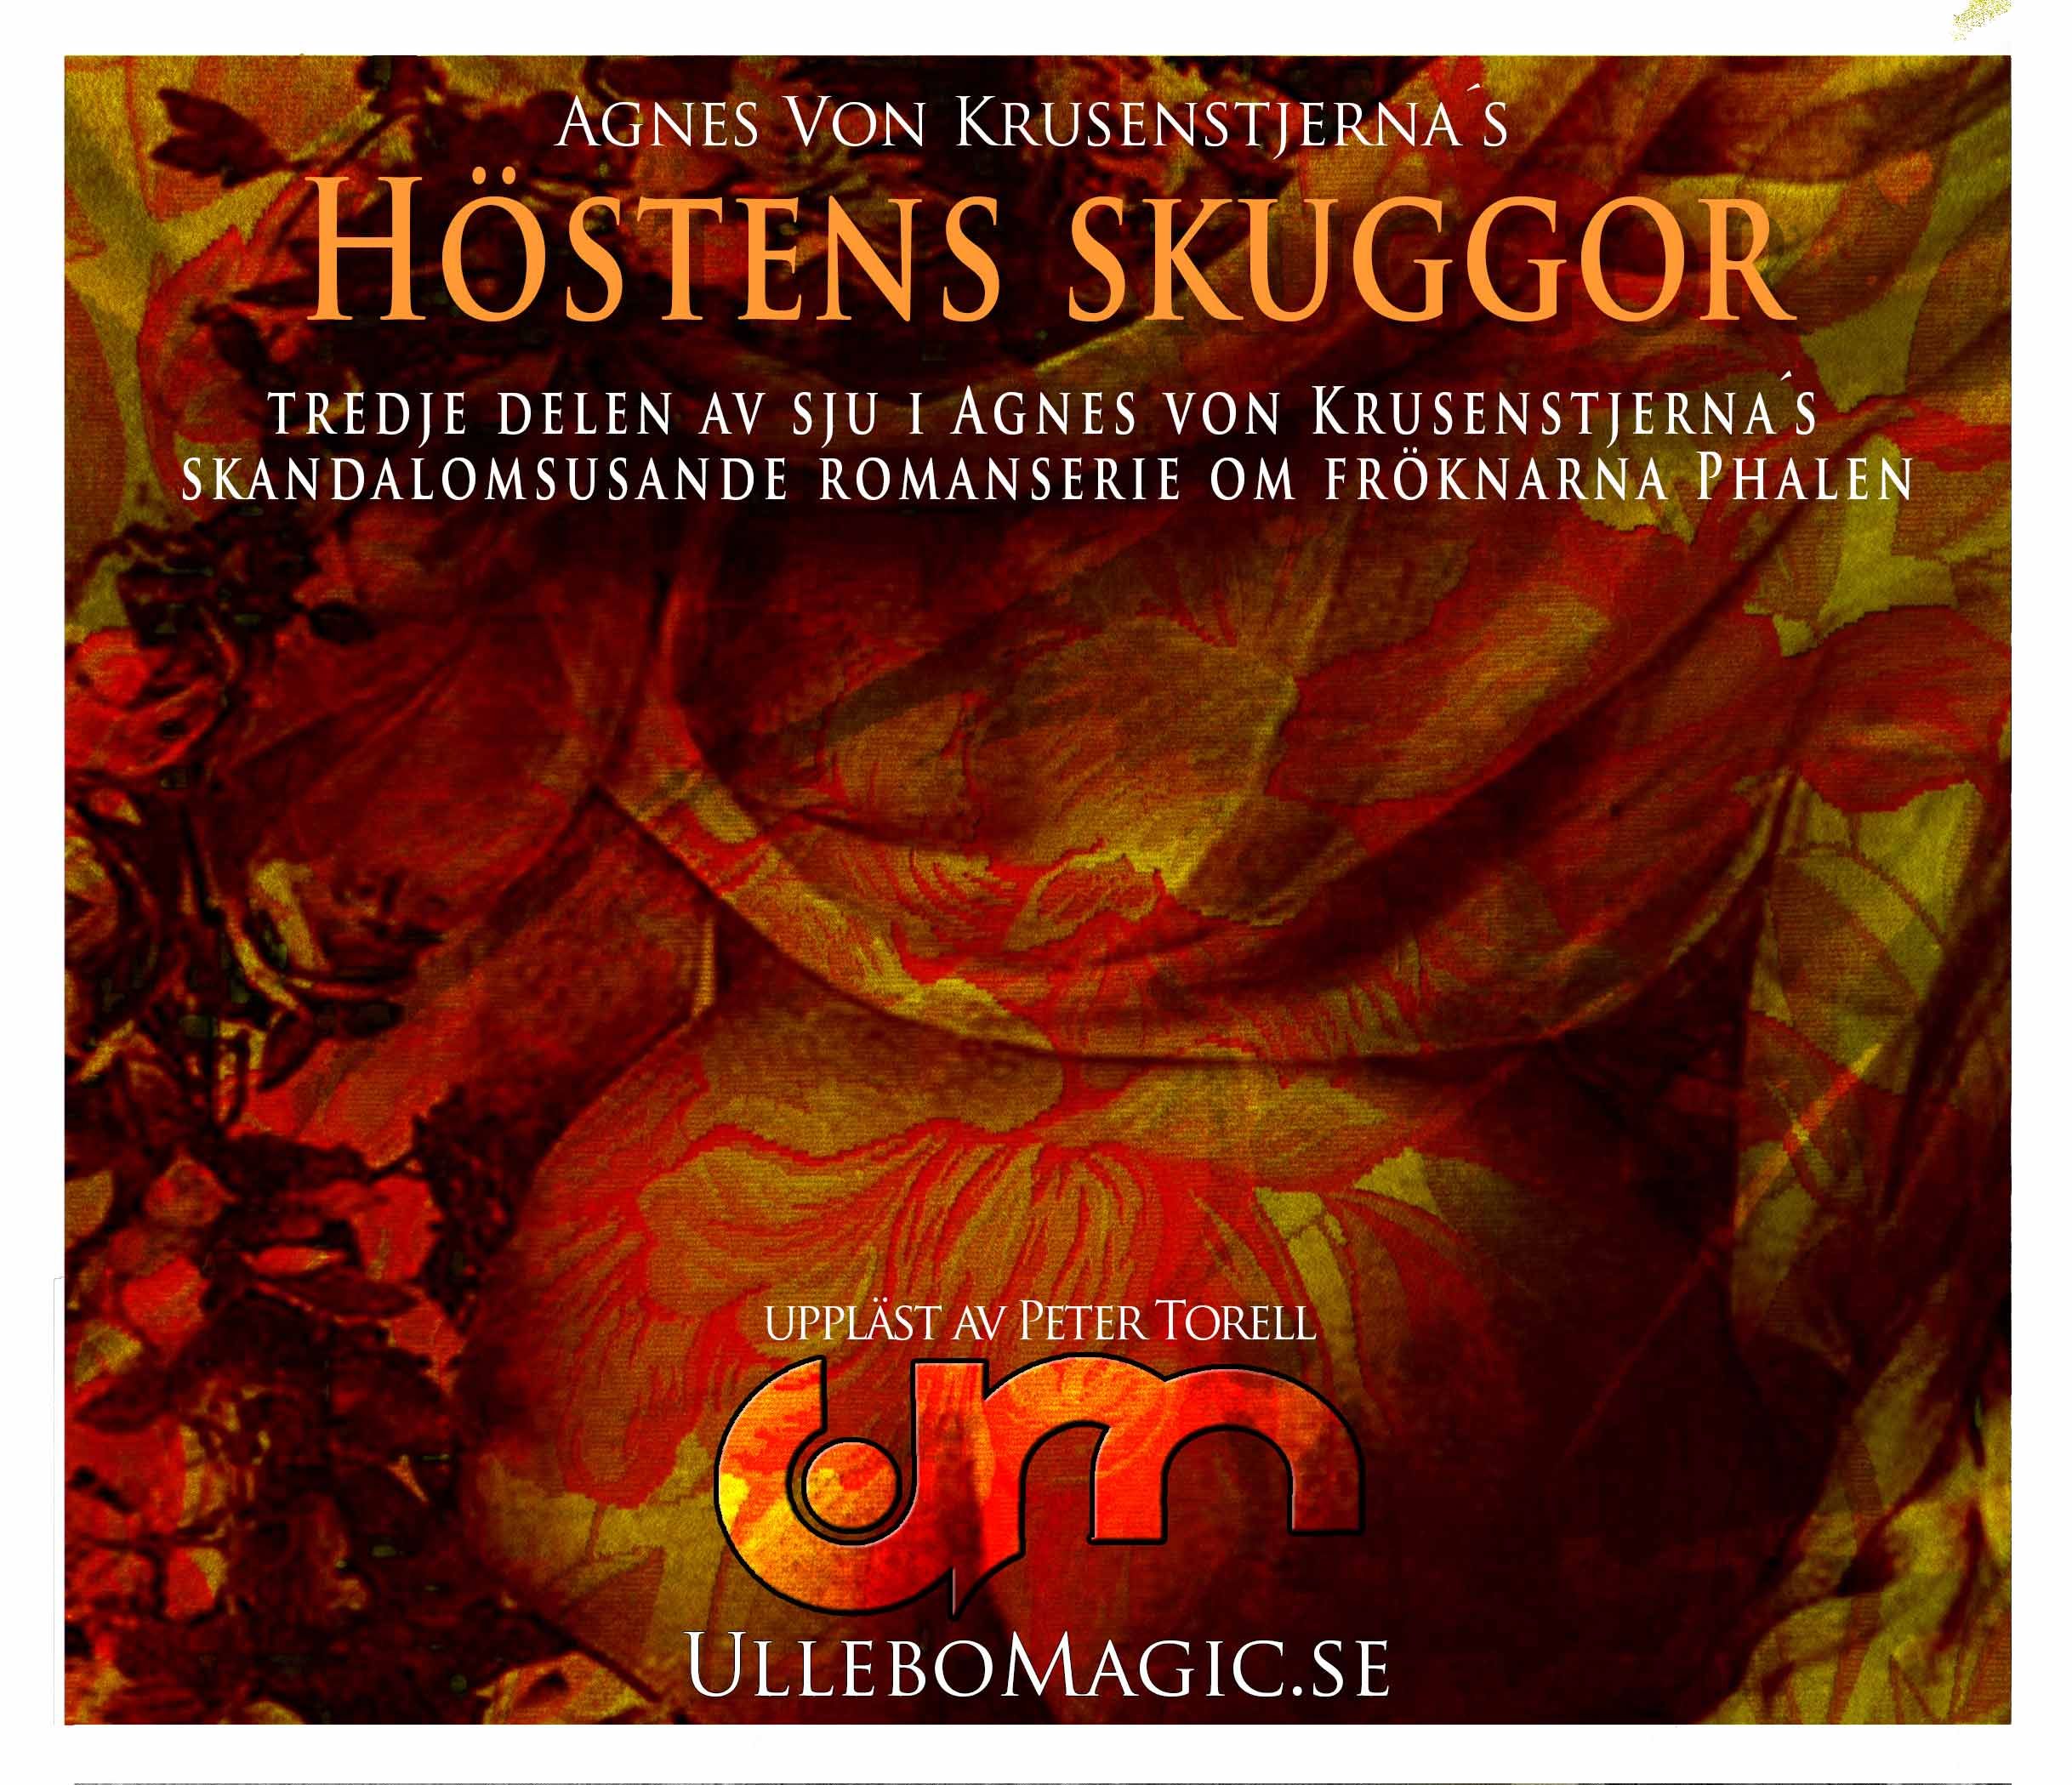 Höstens skuggor, audiobook by Agnes von Krusenstjerna